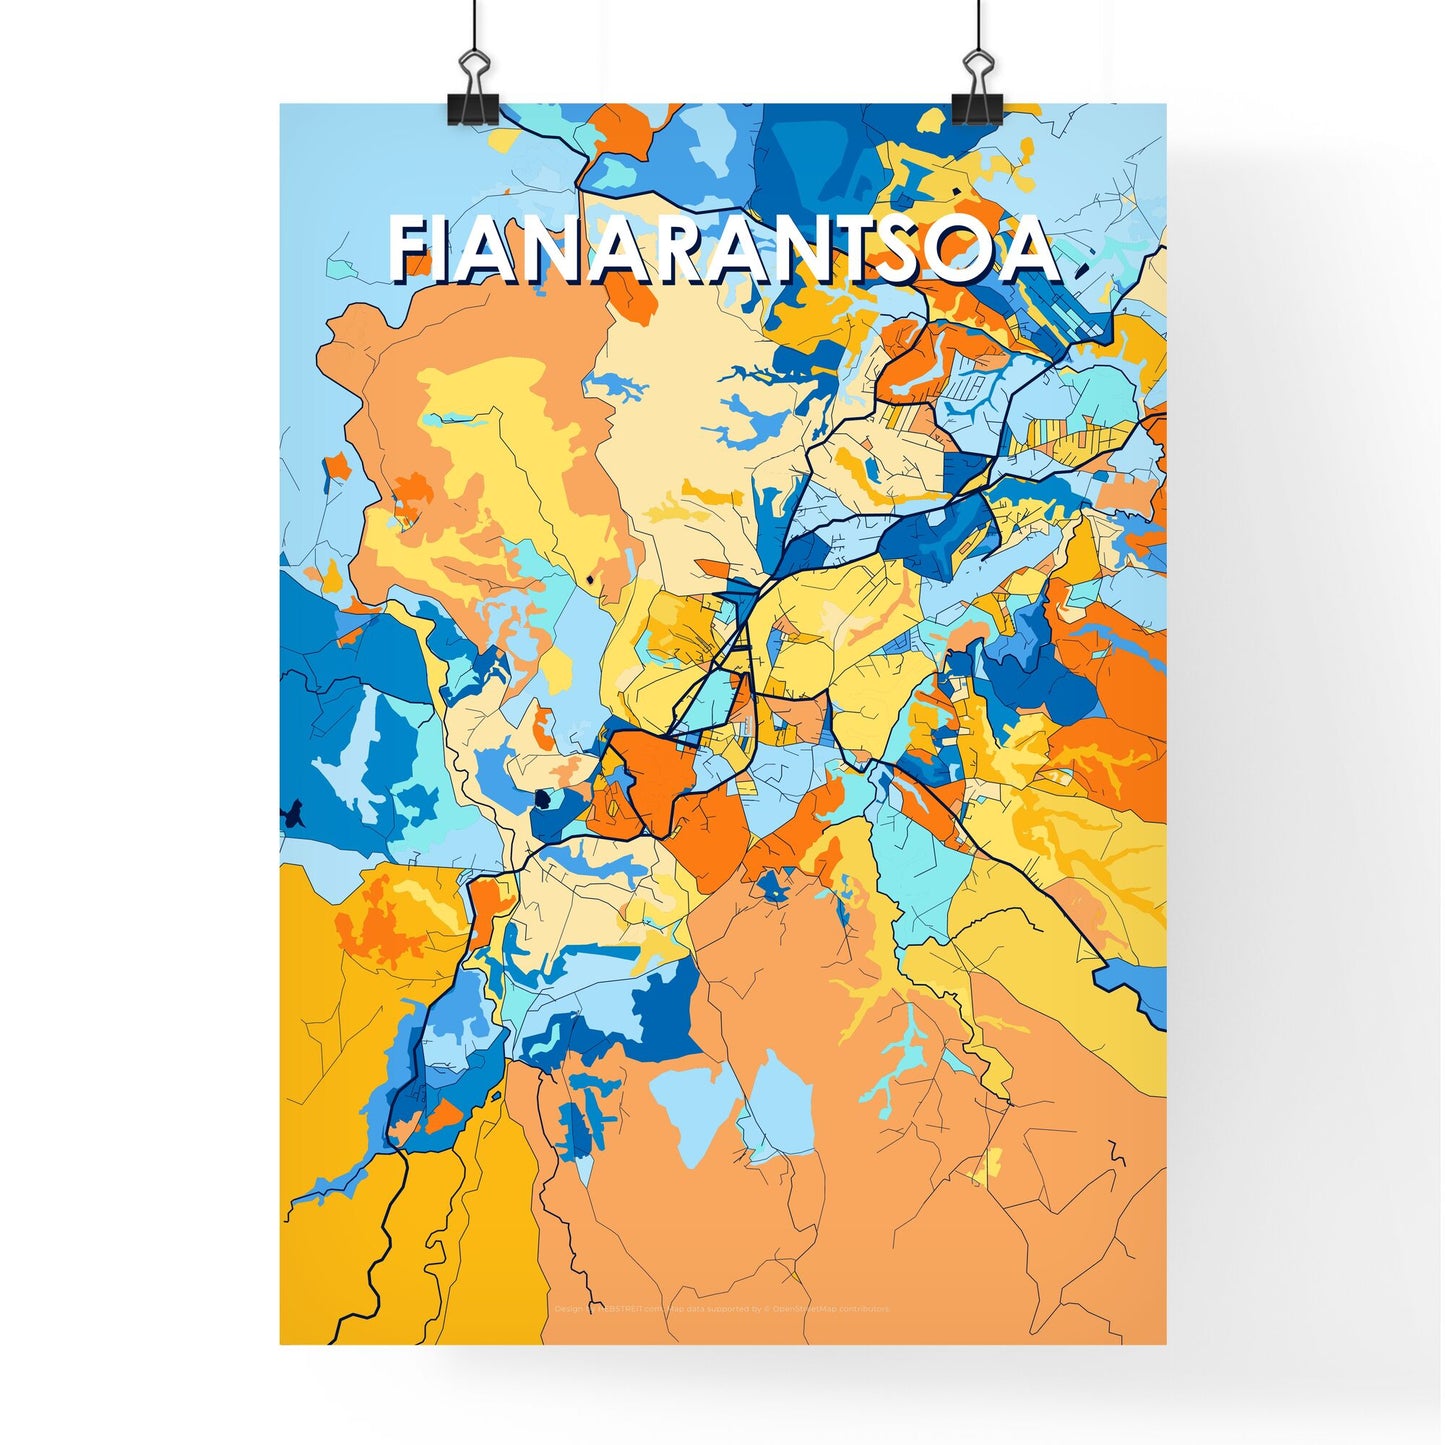 FIANARANTSOA MADAGASCAR Vibrant Colorful Art Map Poster Blue Orange